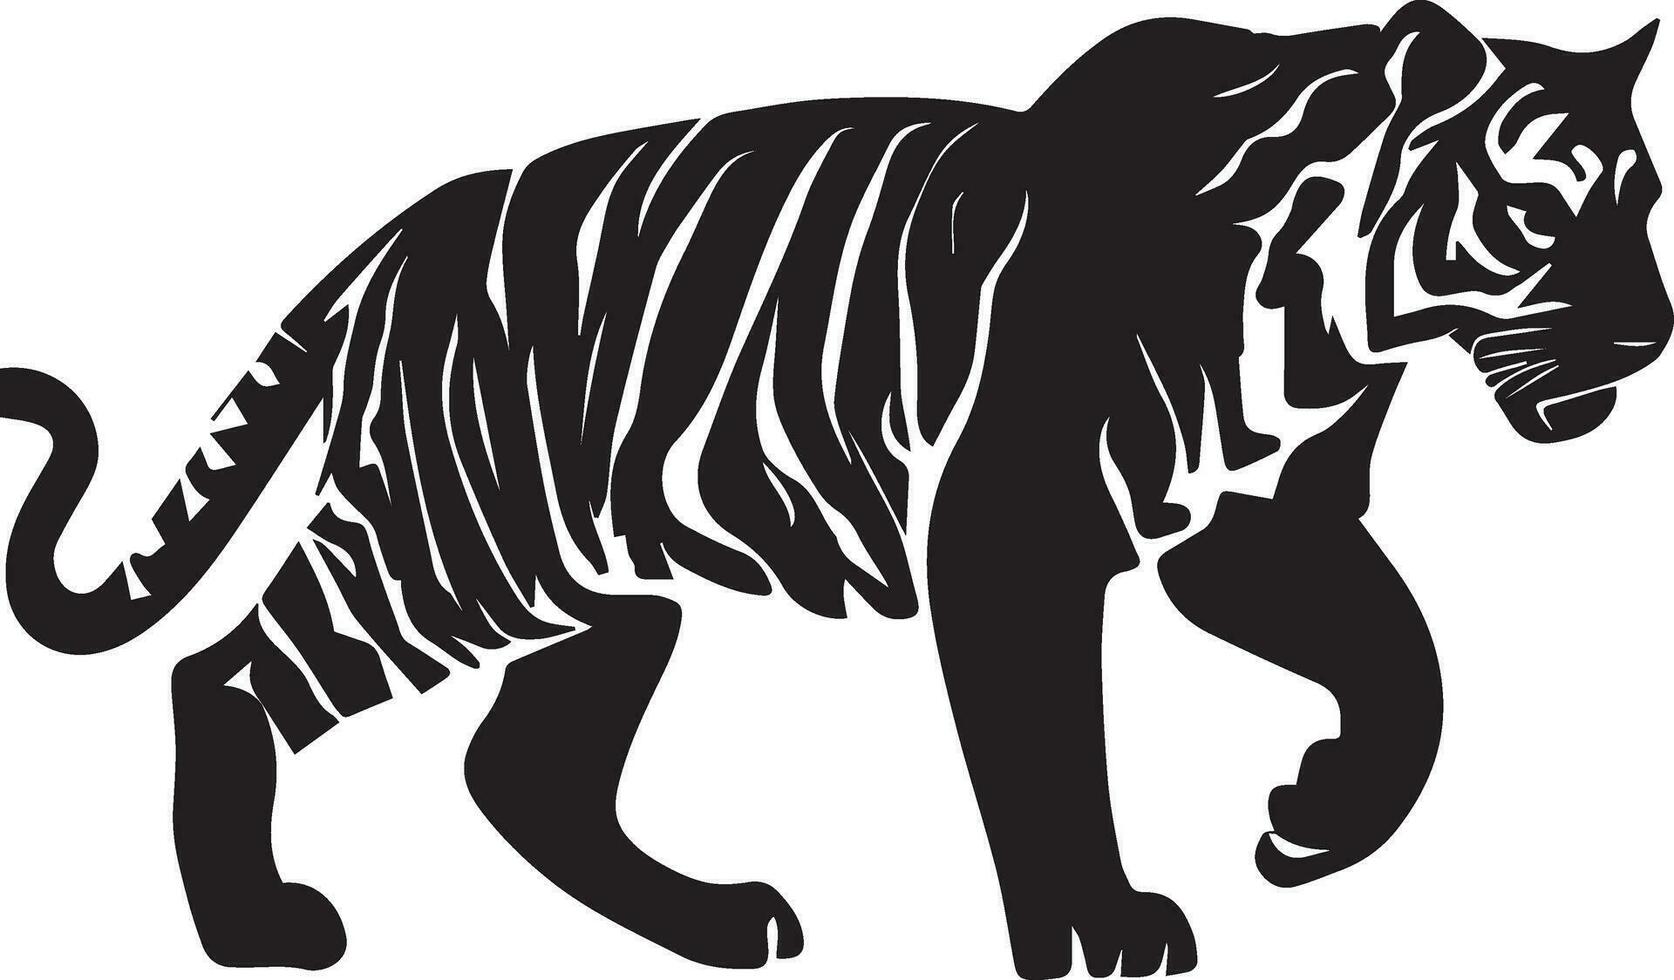 tigre vecteur silhouette illustration, tigre agrafe art